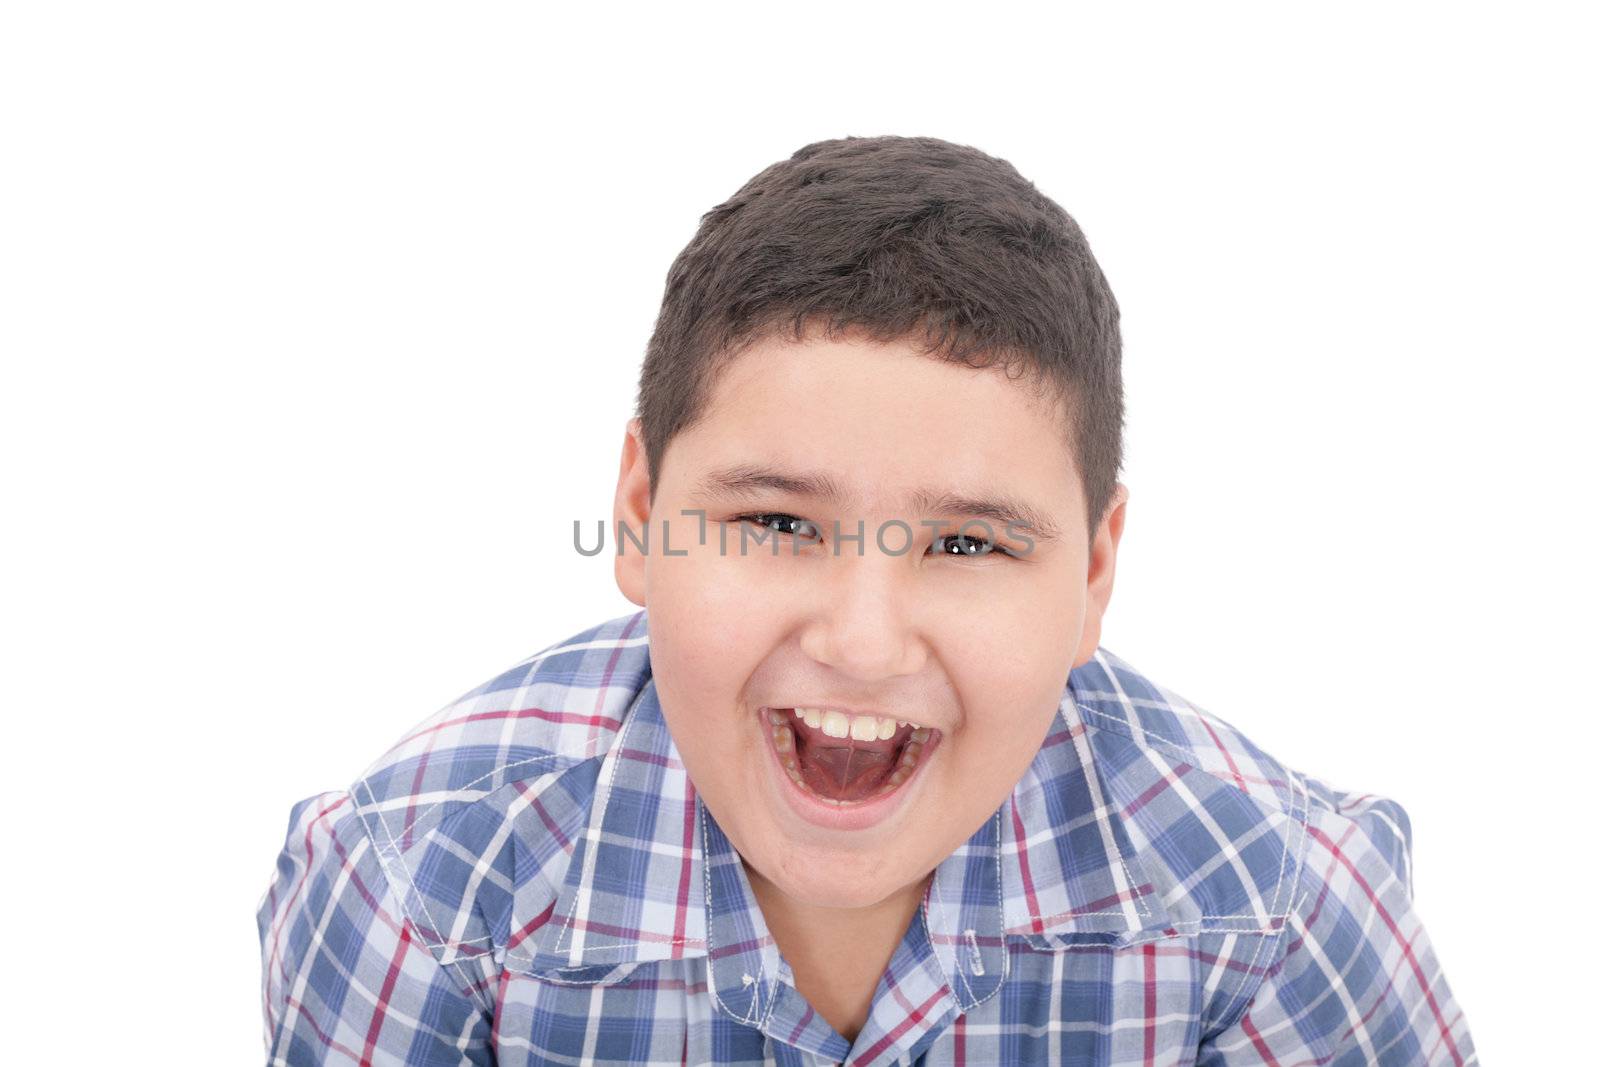 A boy screaming loud with mouth wide open by dacasdo